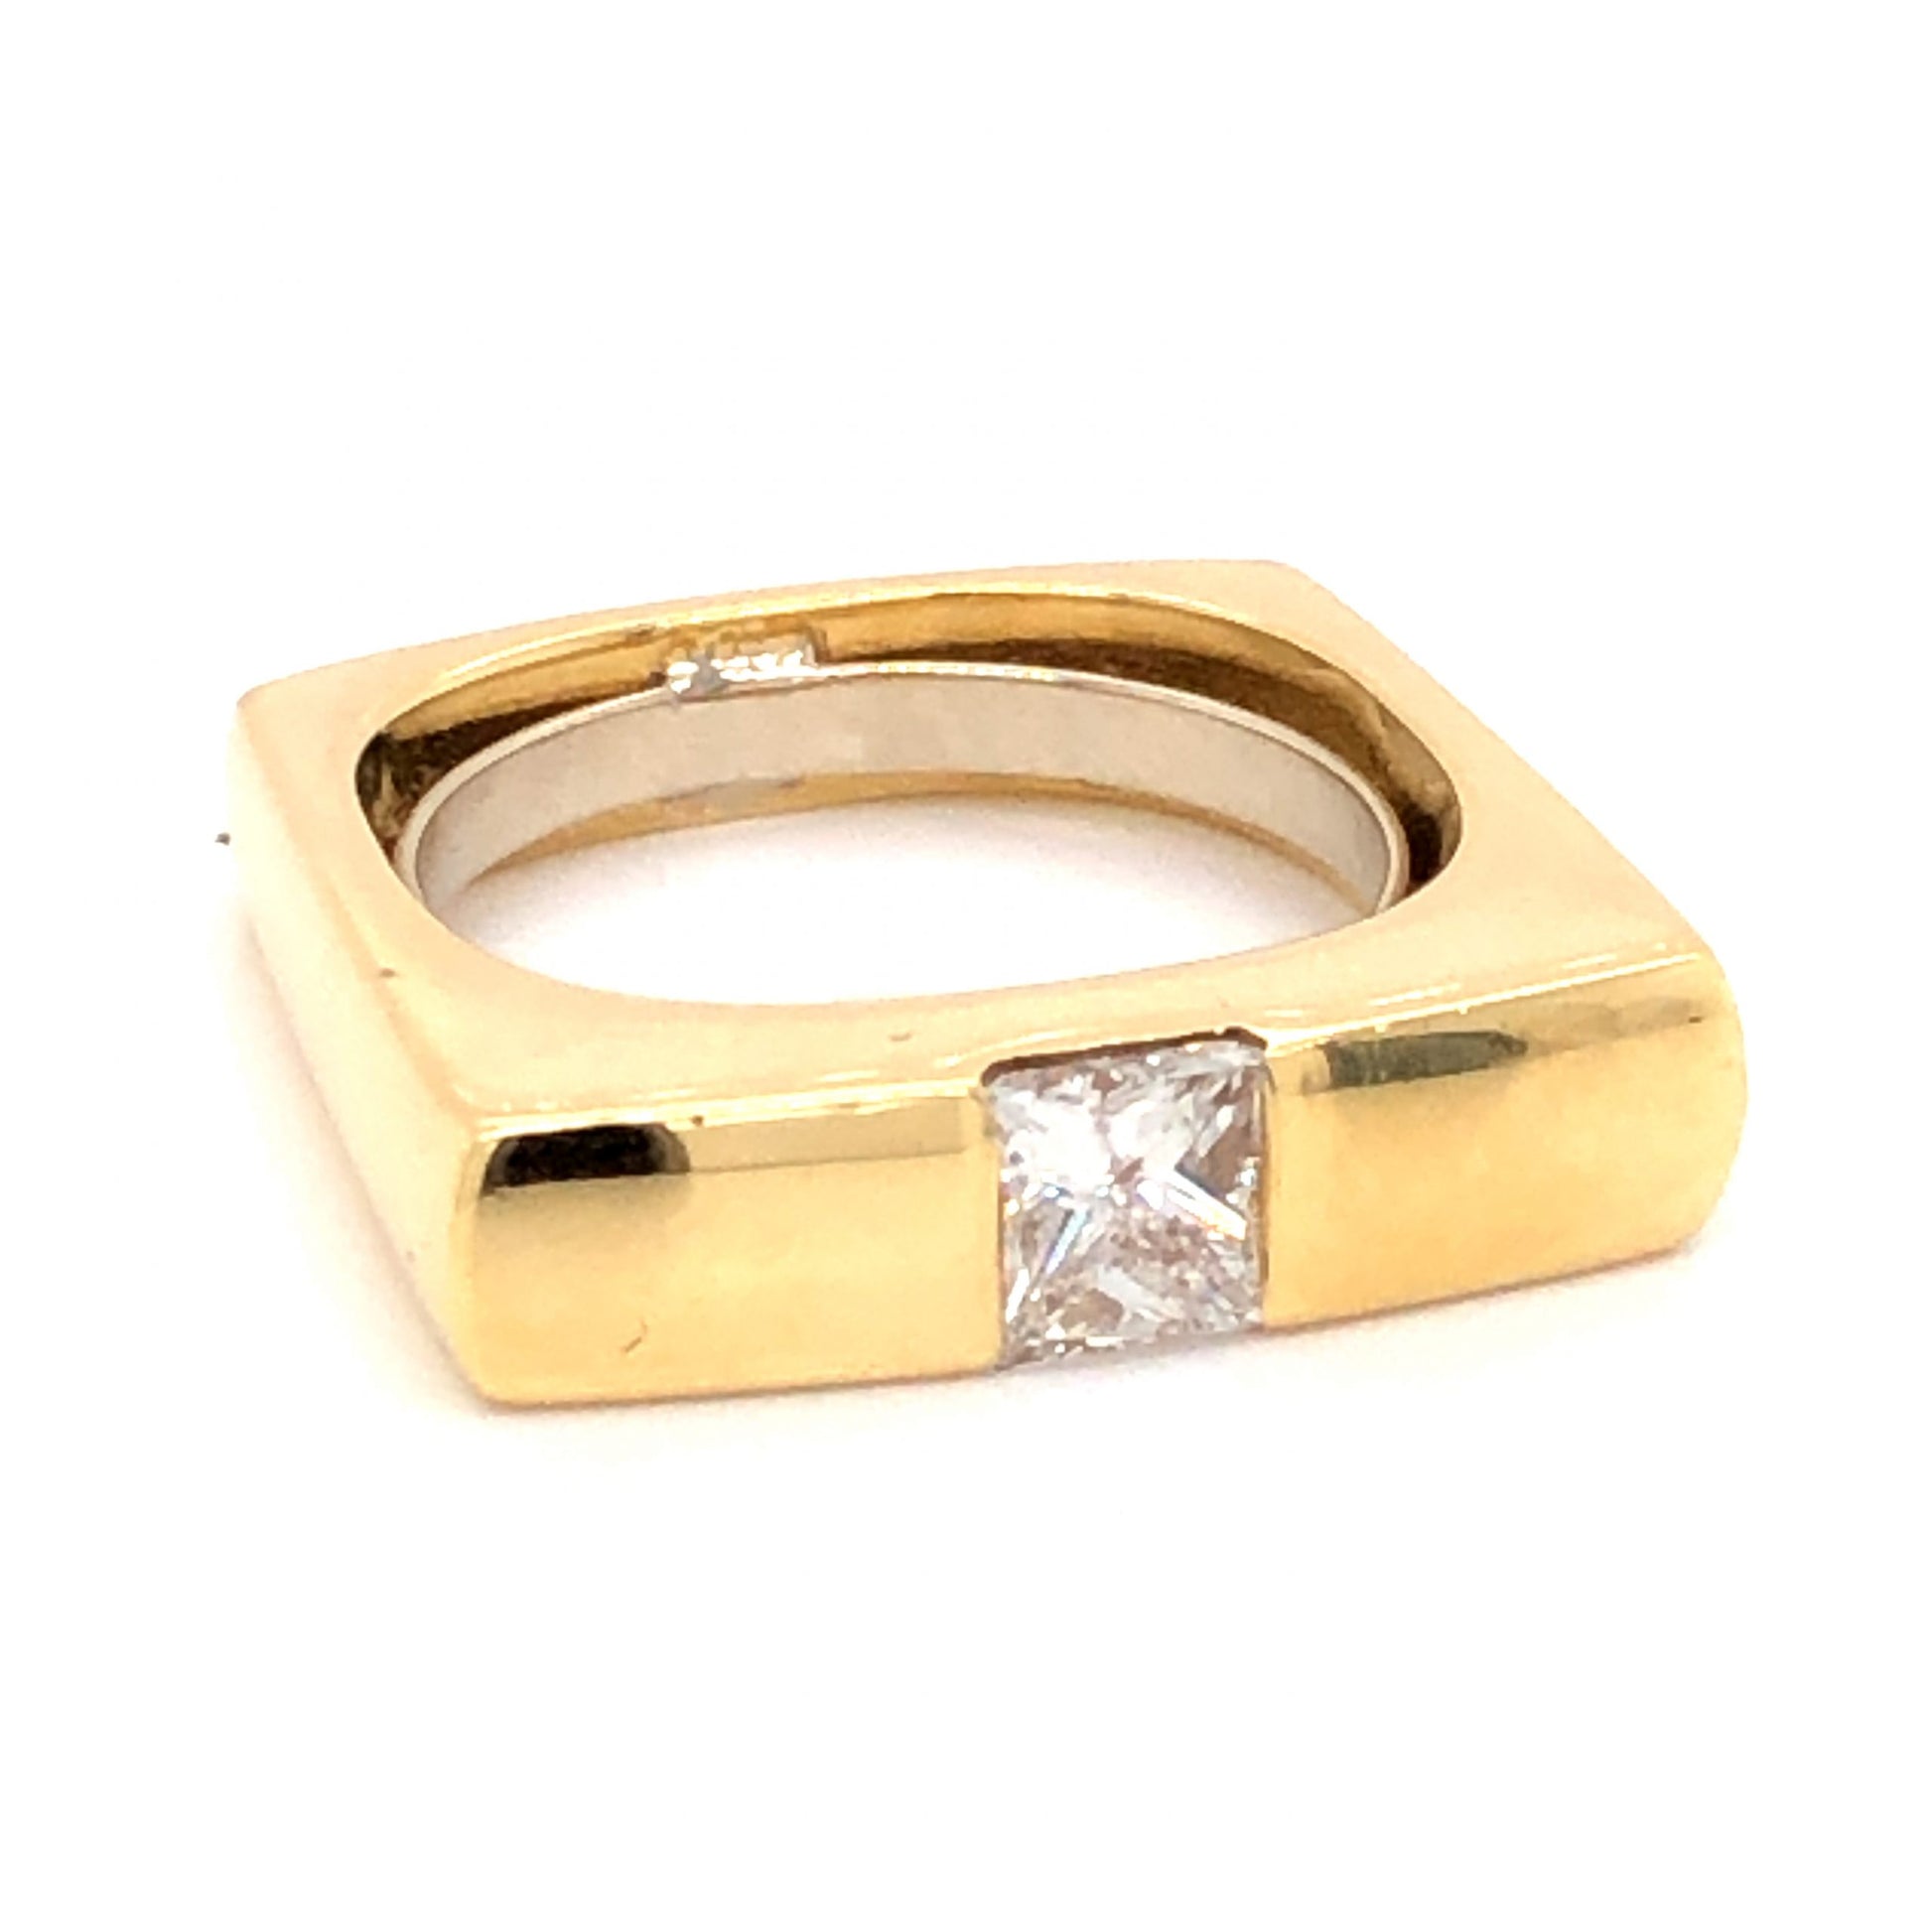 .50 Princess Cut Diamond Cocktail Ring in 18K Yellow Gold